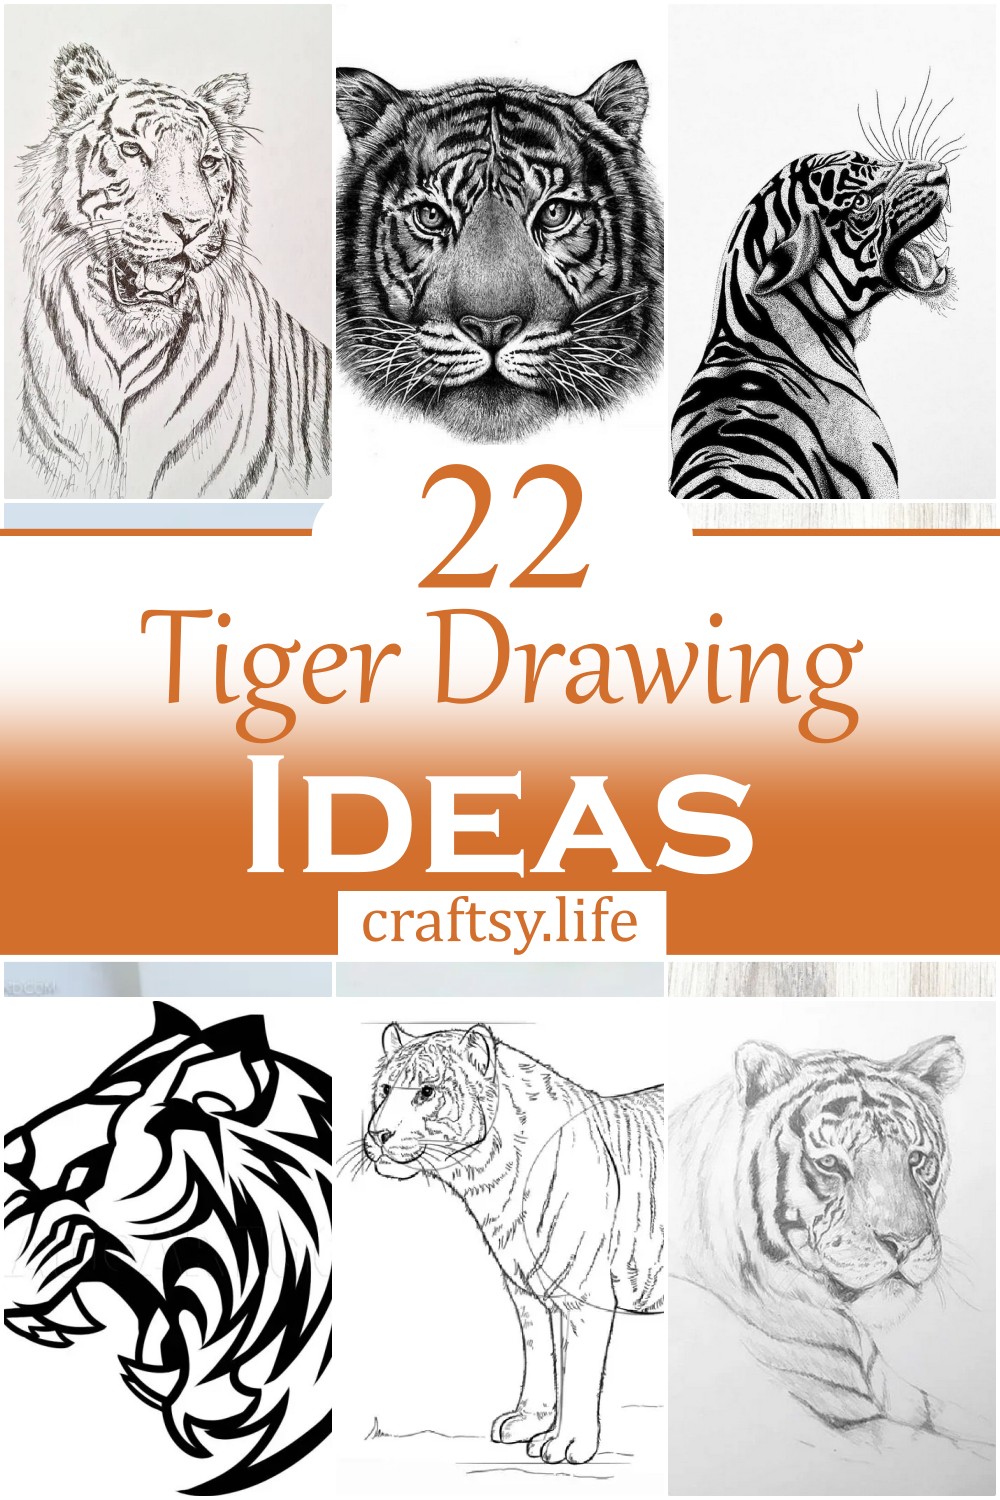 Tiger Drawing Ideas